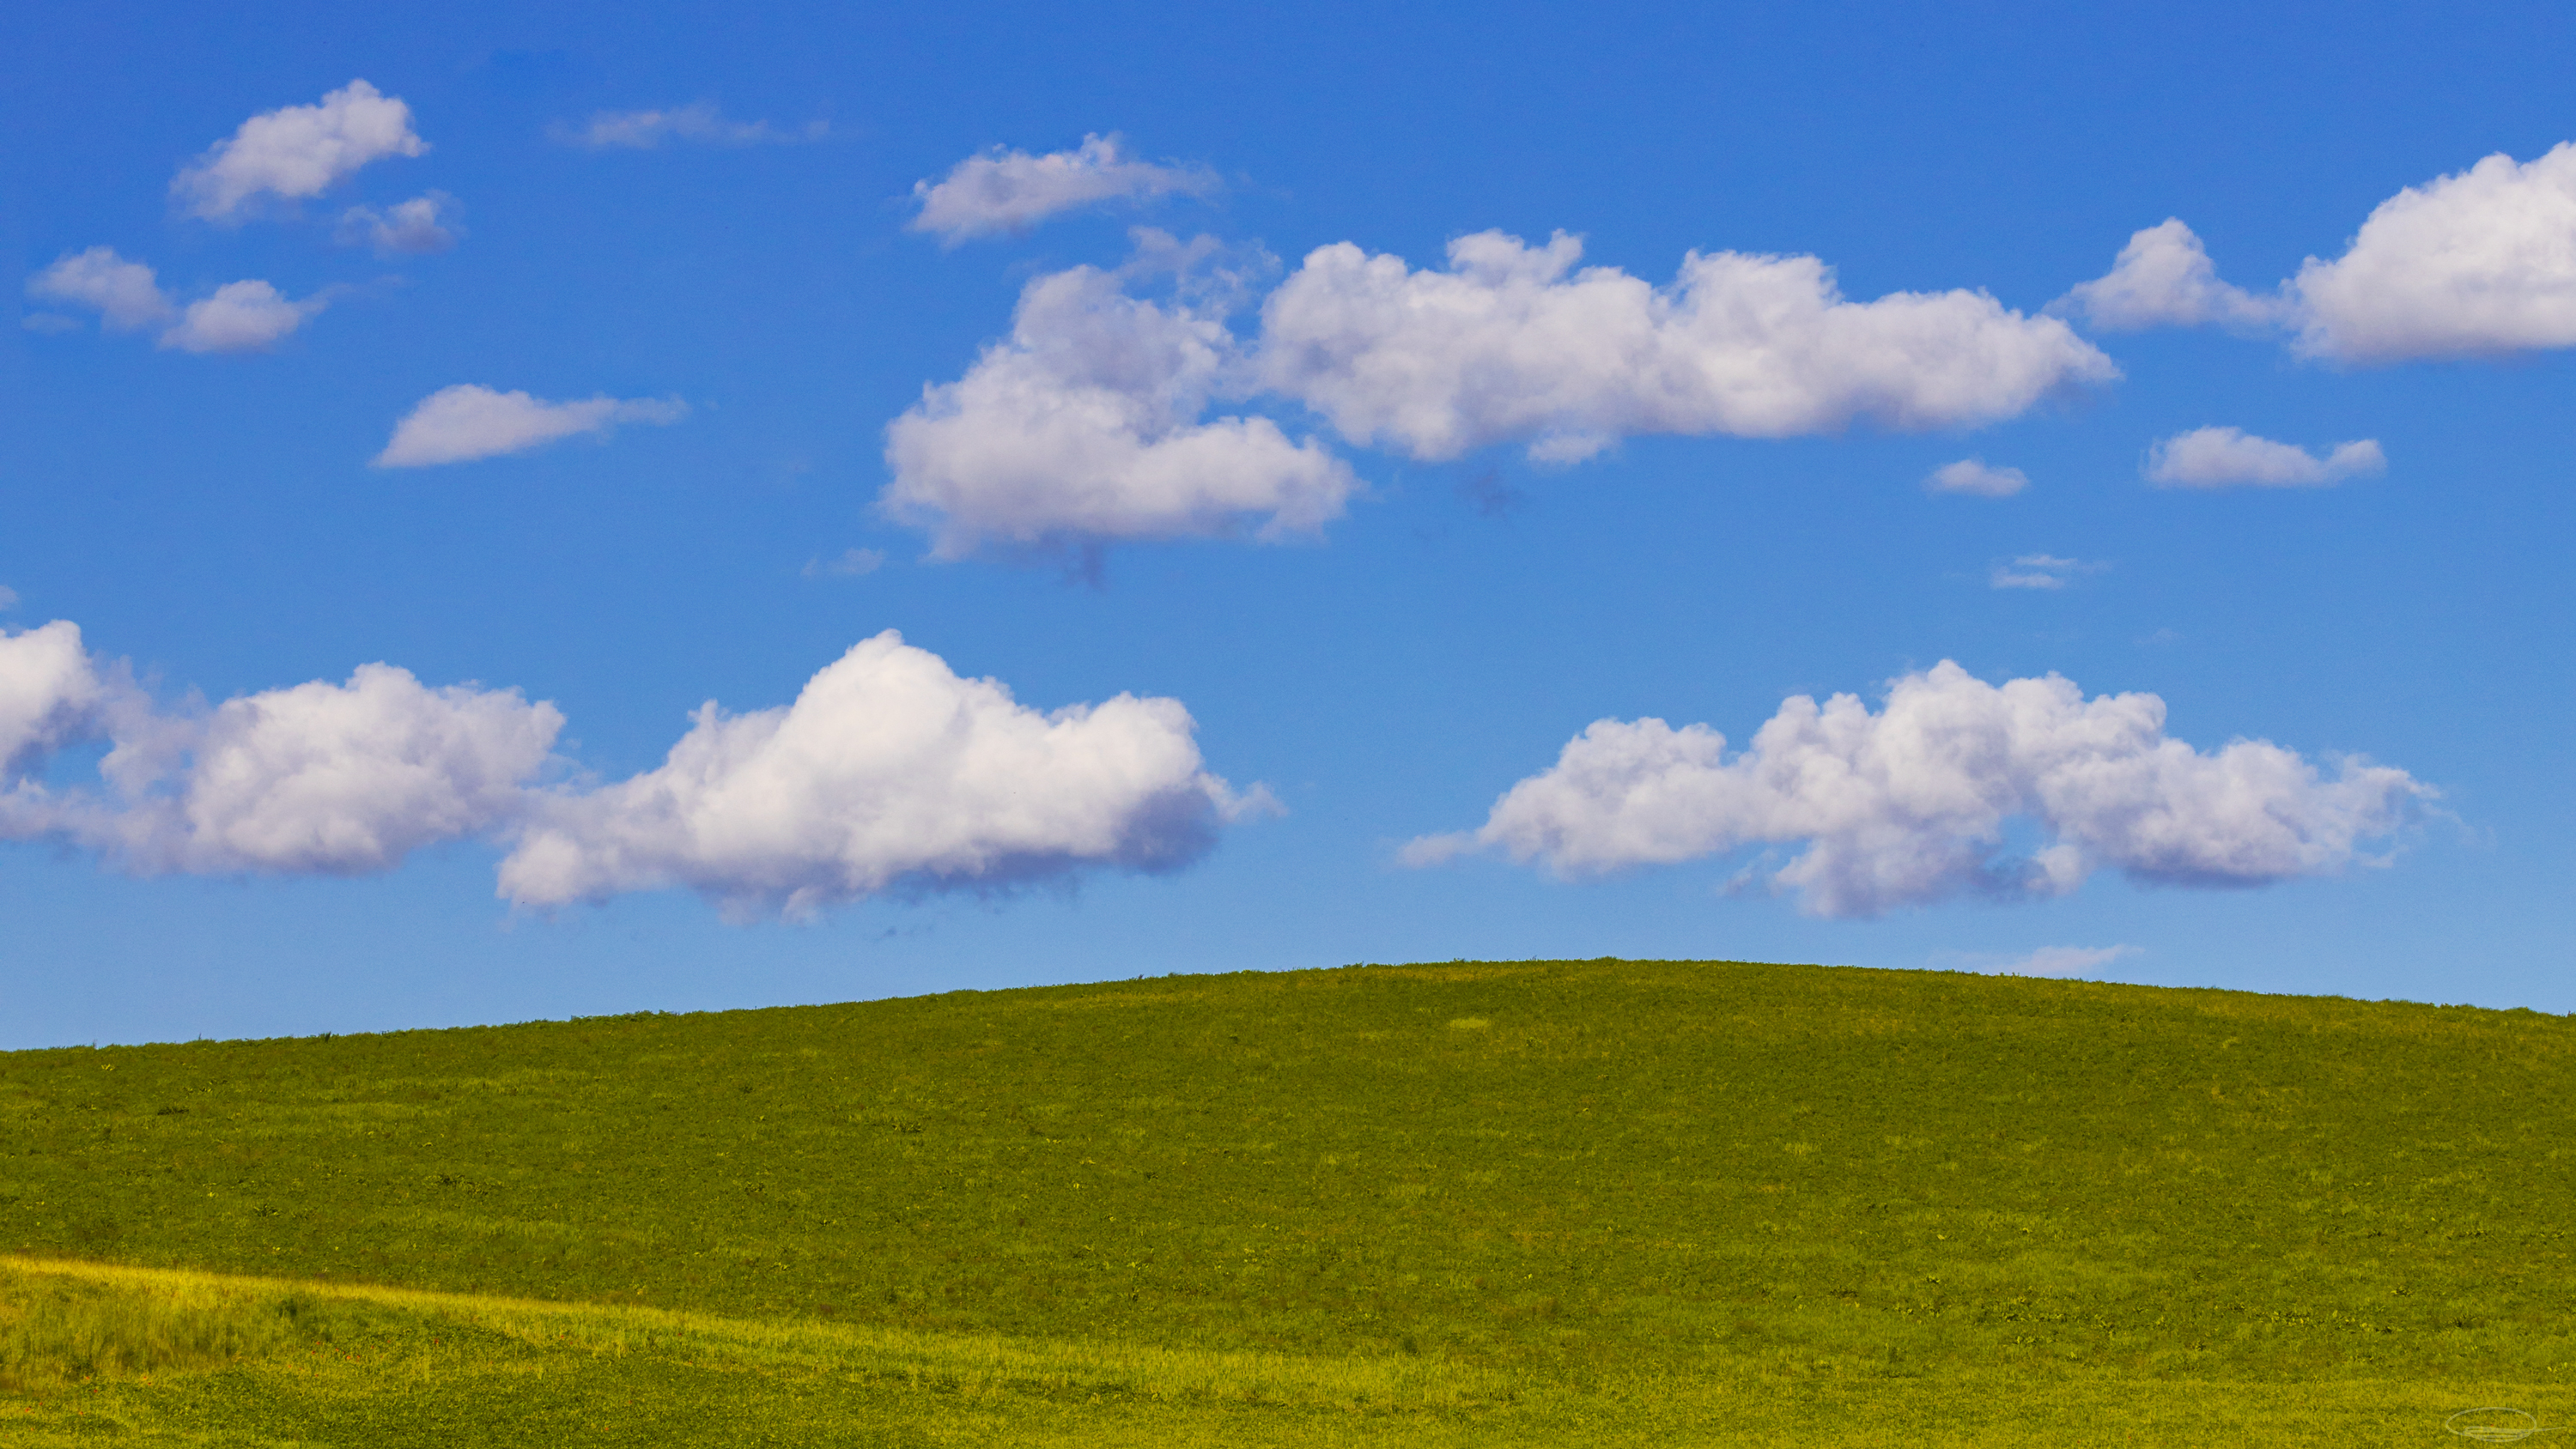 Blue skies and green hills - Windows XP feeling